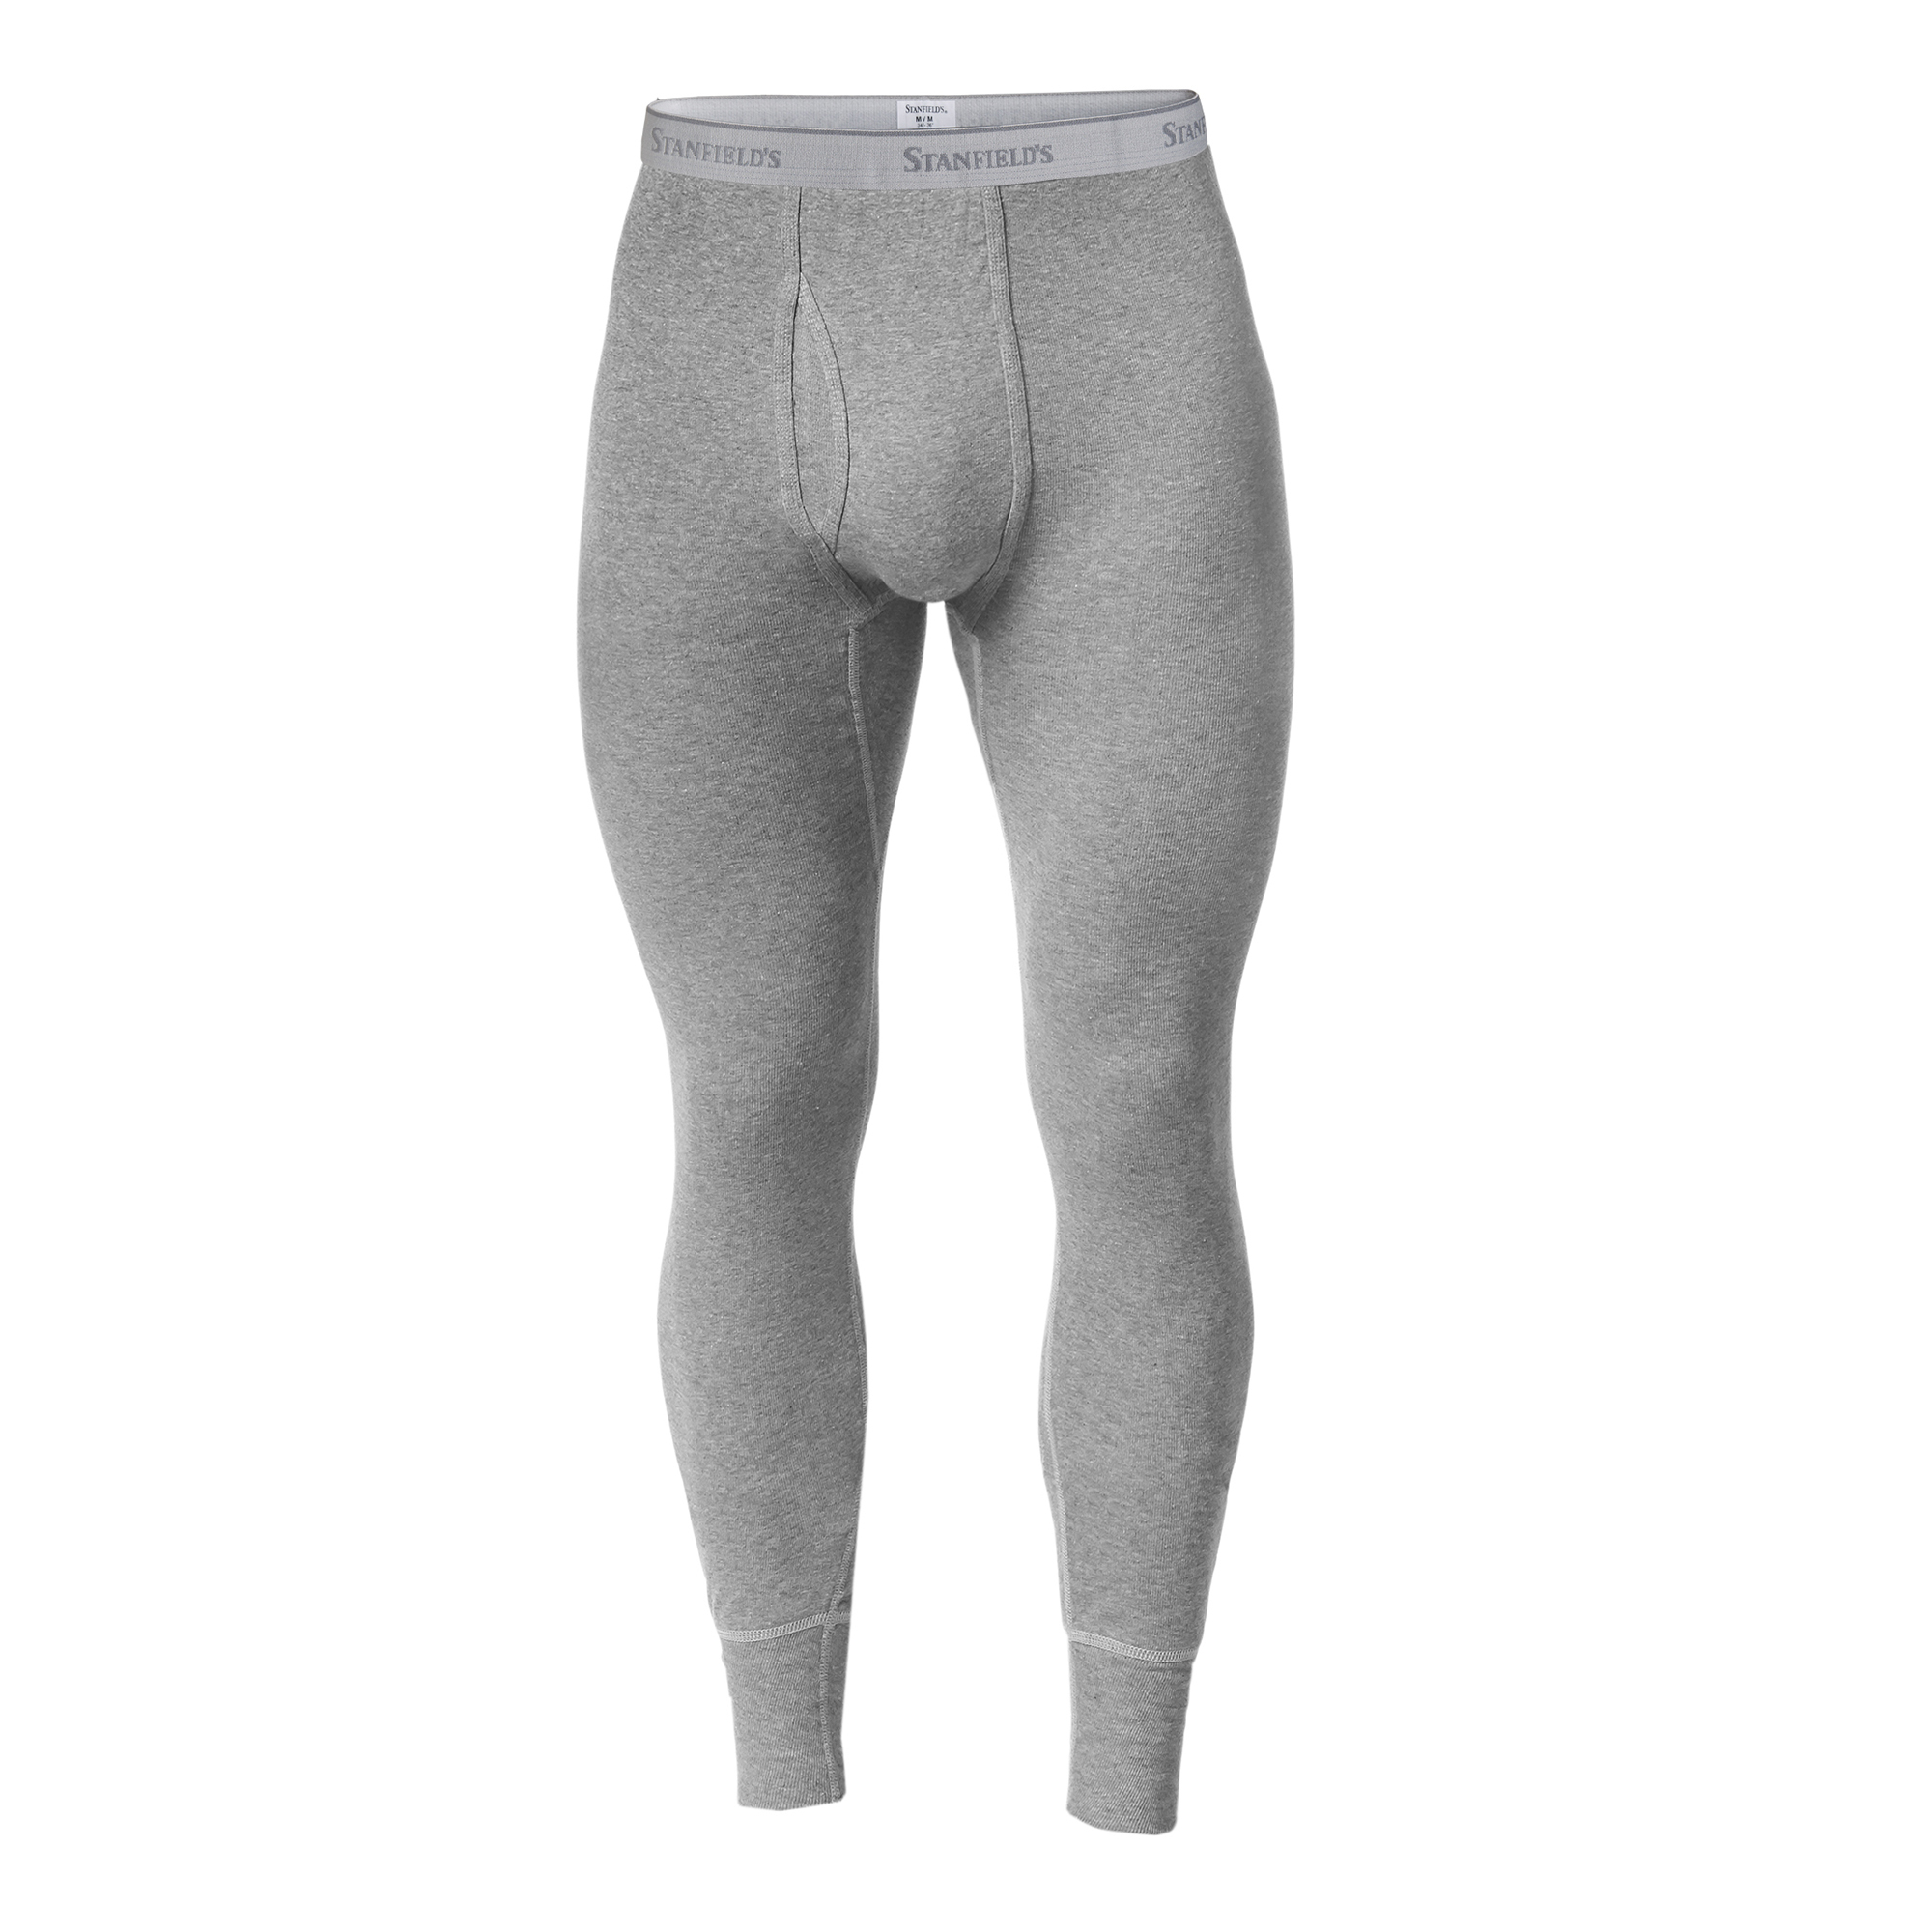 Men Thermal Long Johns Bottoms Long Underwear Base Layer Bottoms